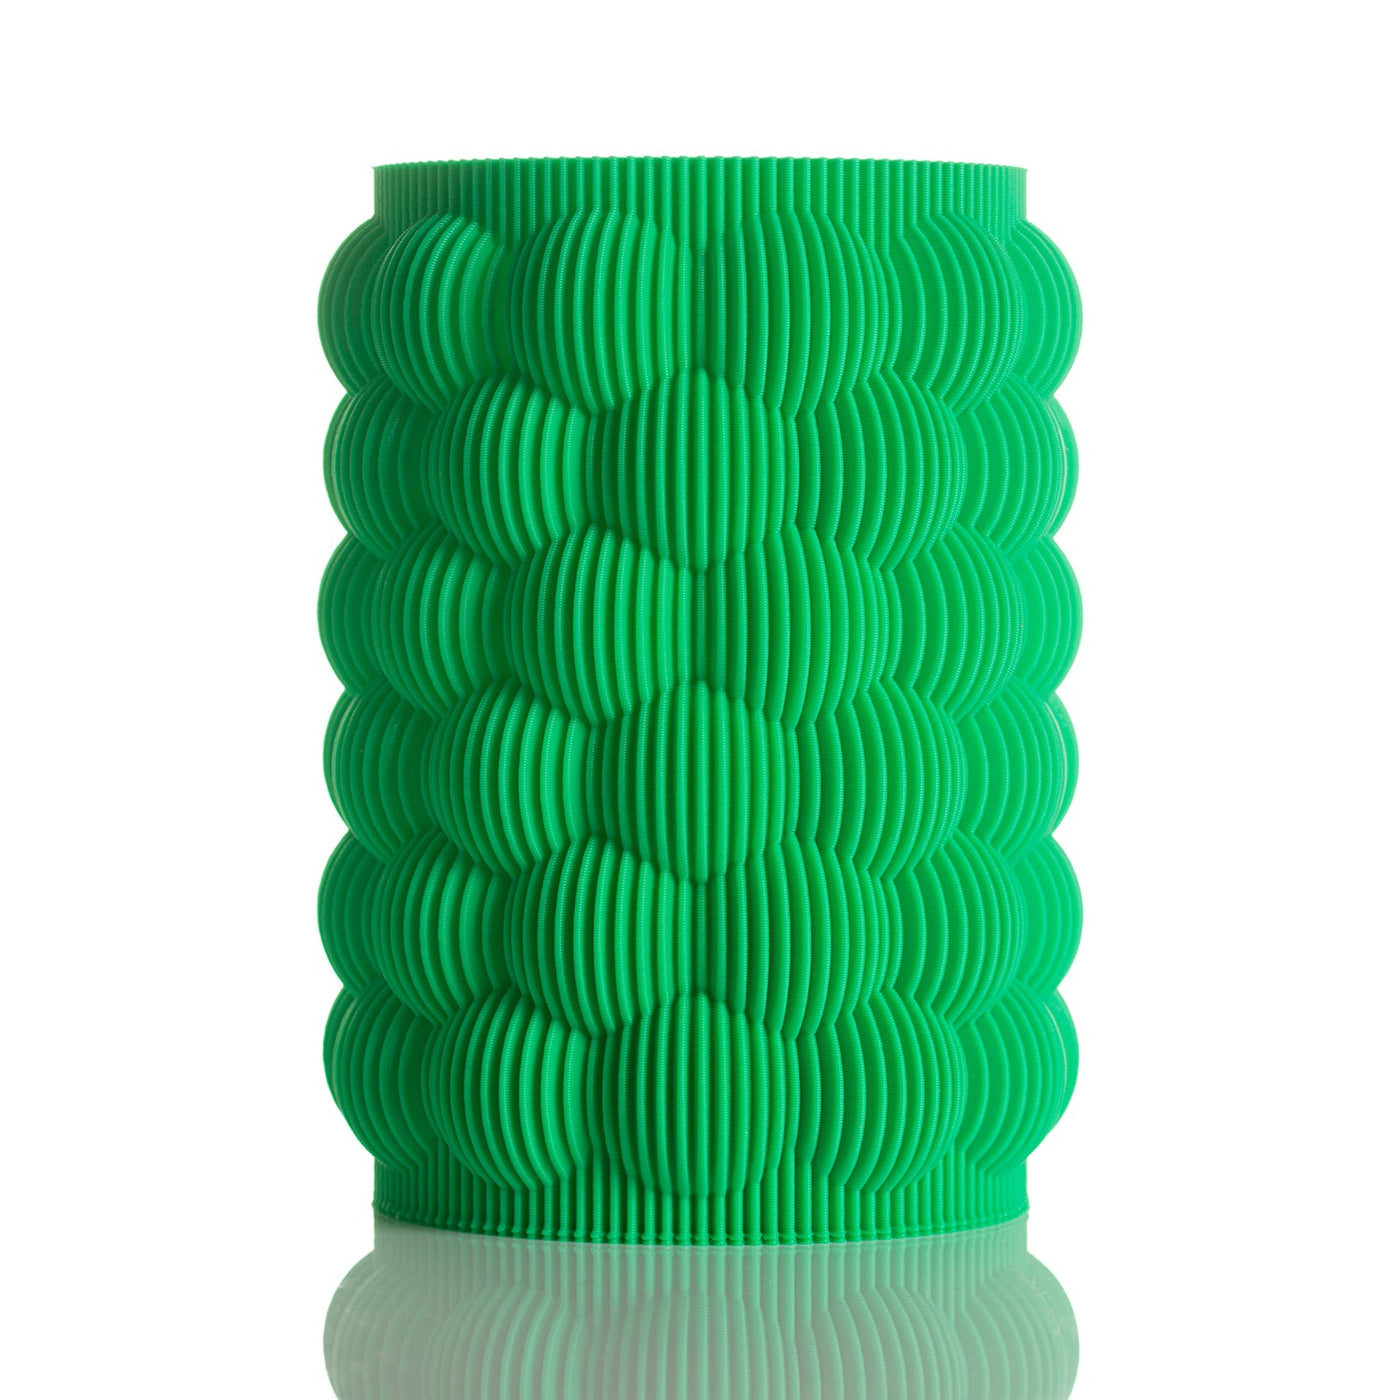 Cool 3D Printed Vase UAU Project Dollydagger